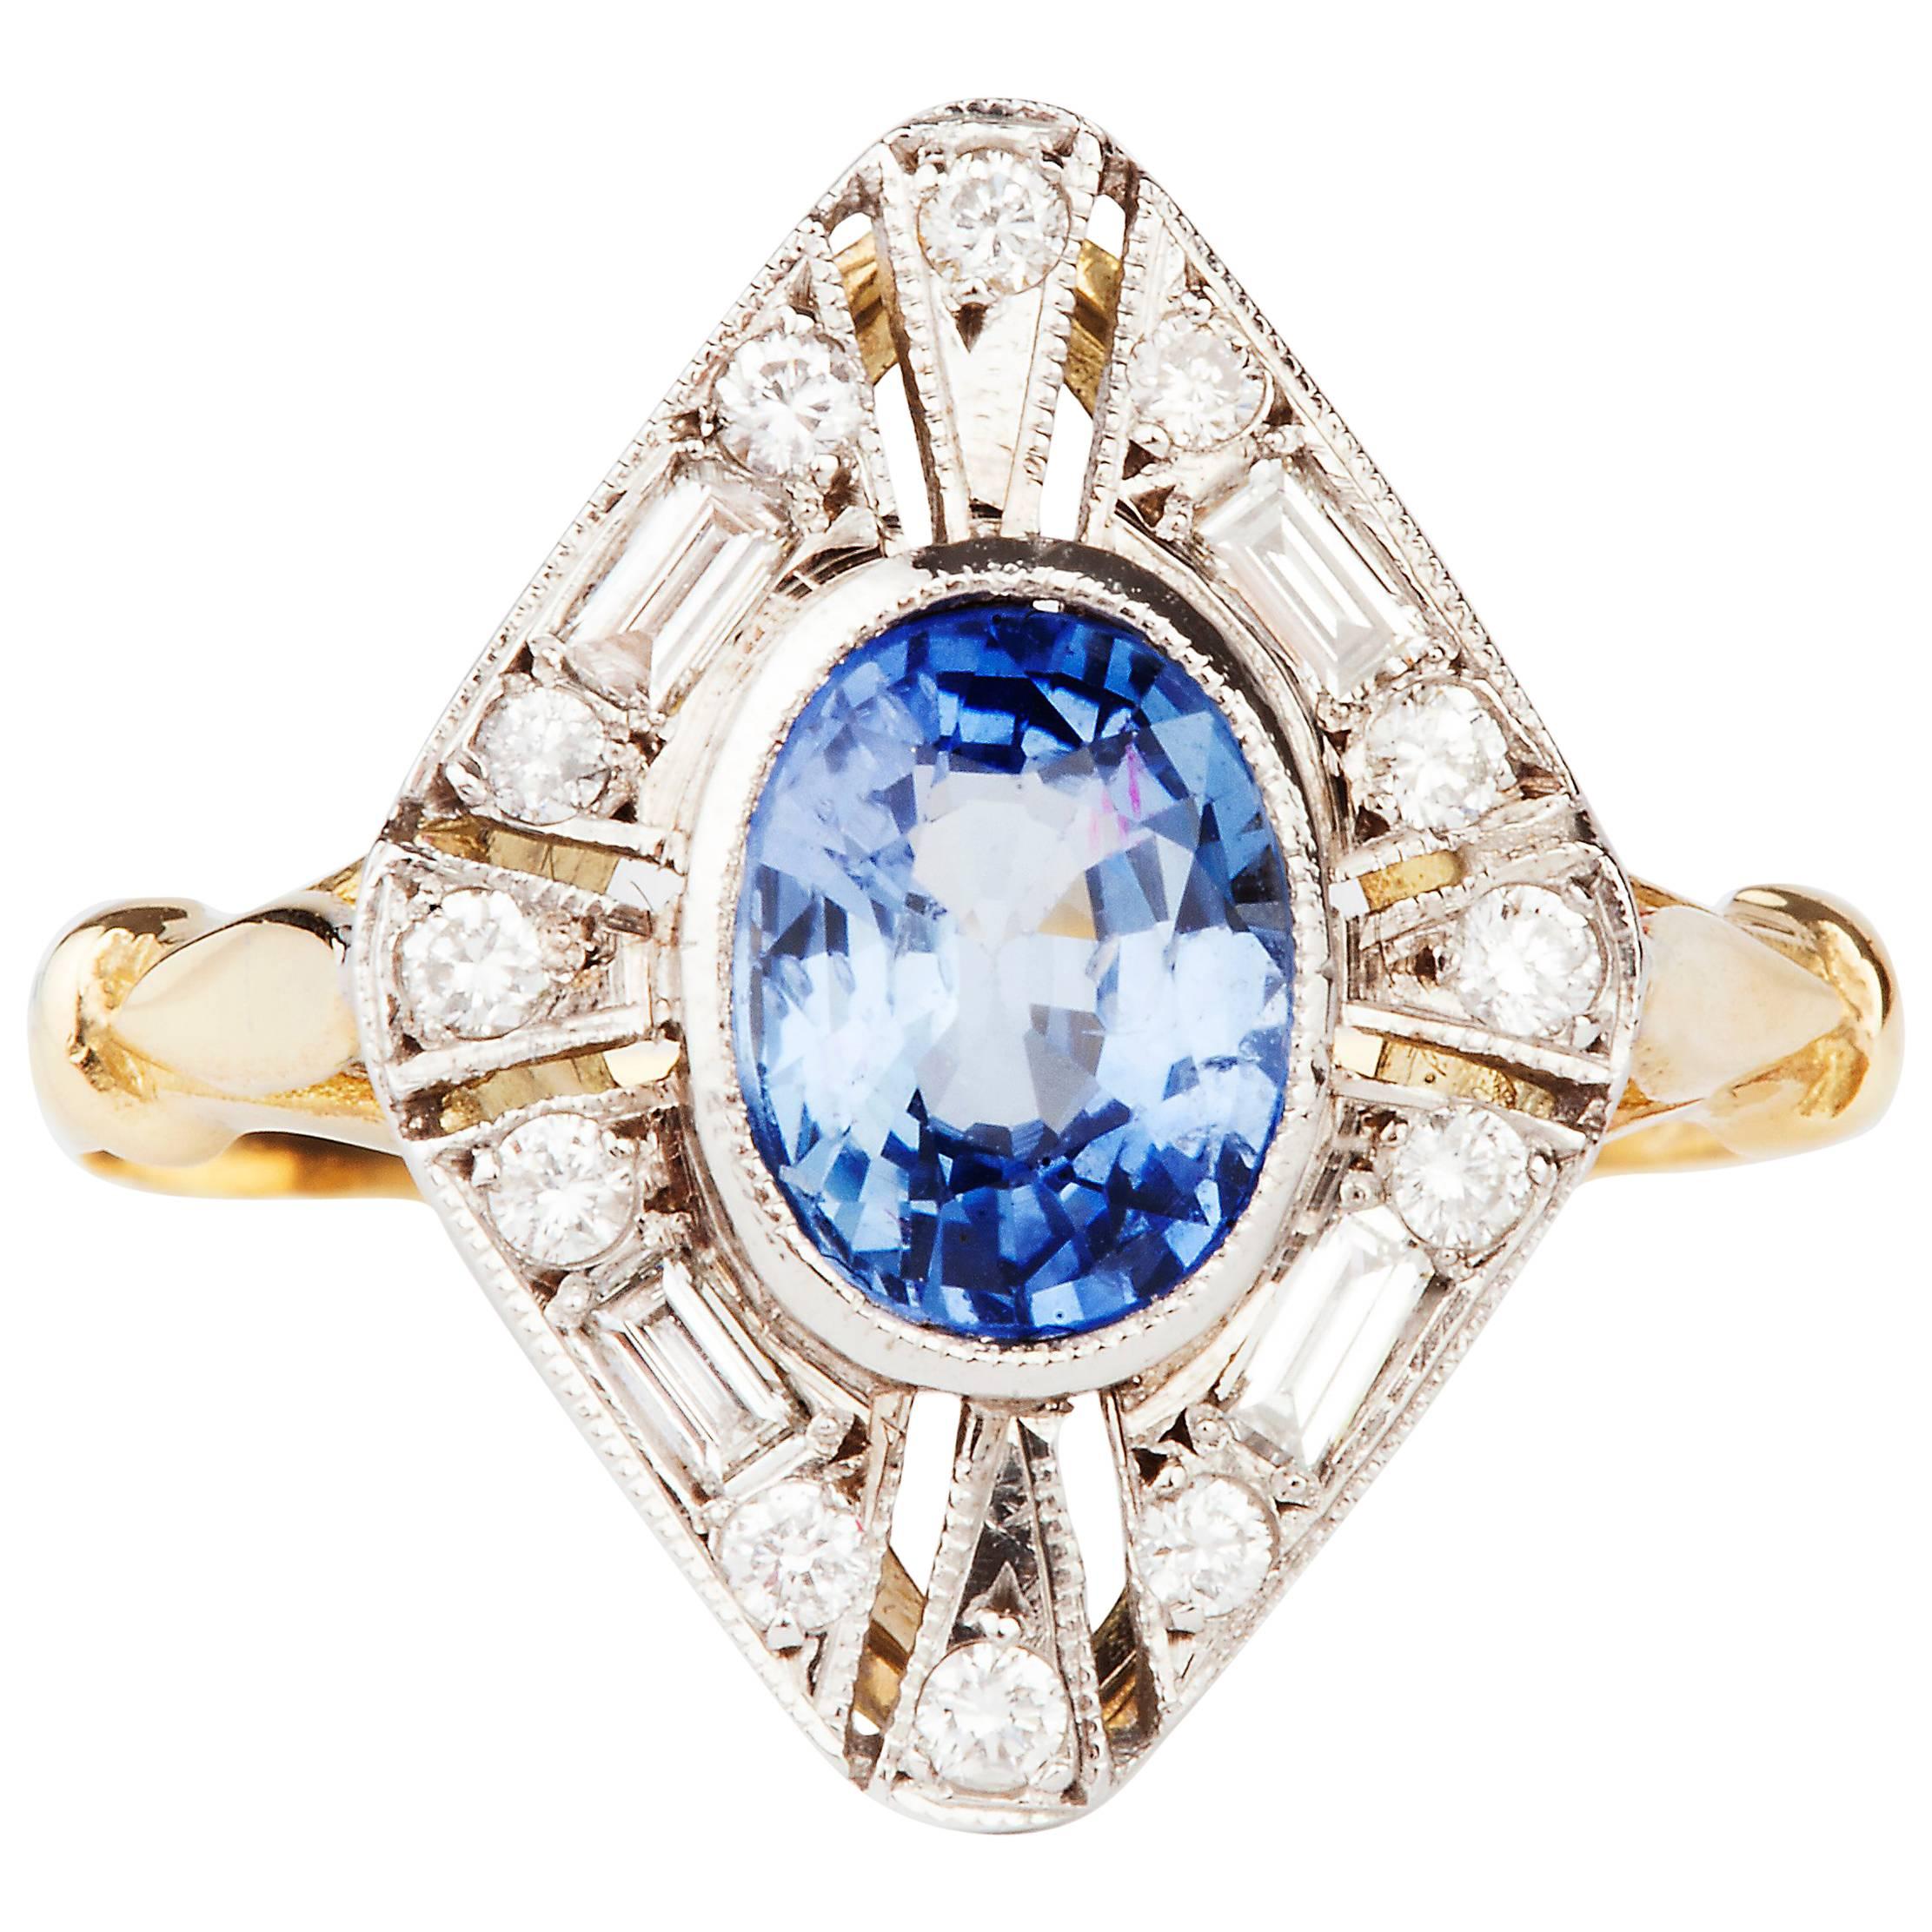 Cornflower Blue Sapphire and Diamond Art Deco Style Ring